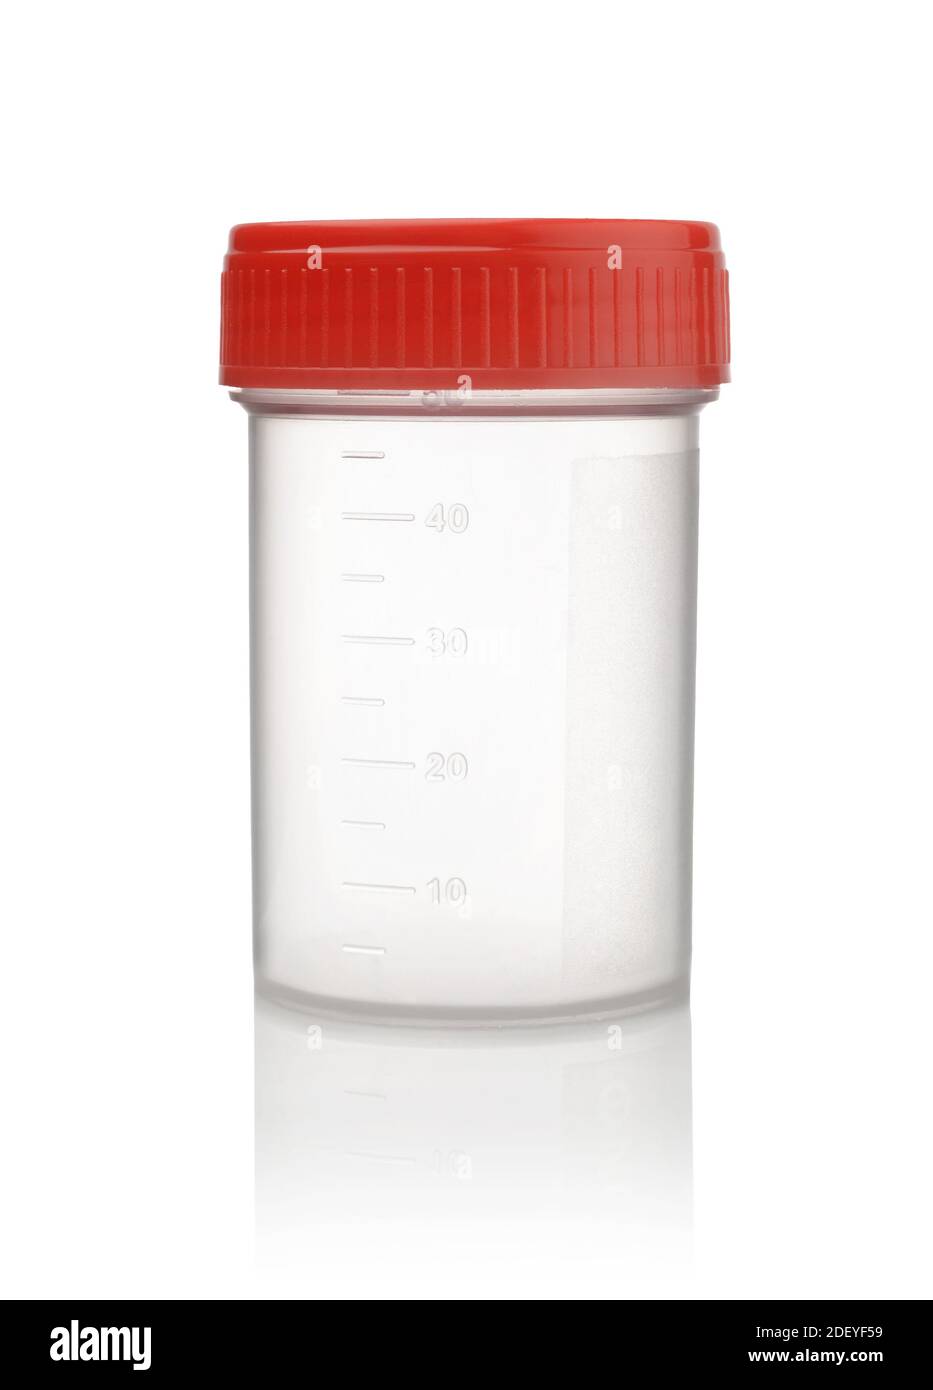 https://c8.alamy.com/comp/2DEYF59/plastic-medical-laboratory-container-isolated-on-white-2DEYF59.jpg